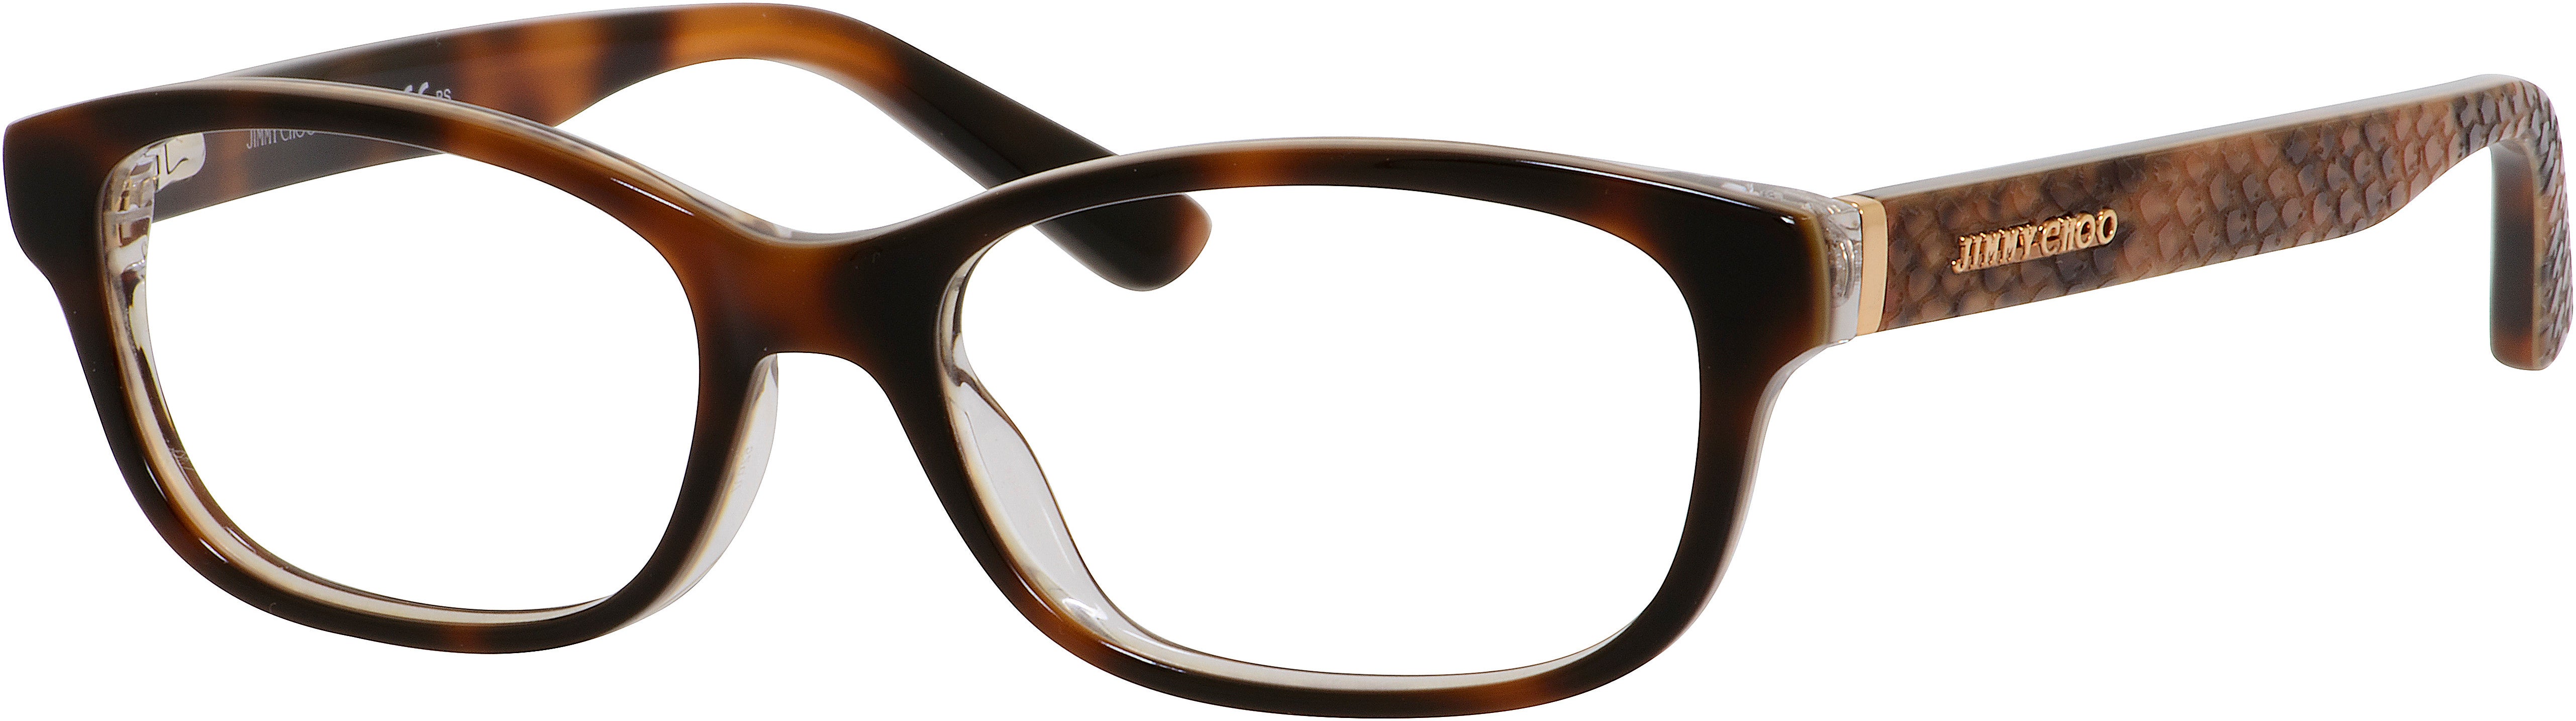  Jimmy Choo 121 Oval Modified Eyeglasses 0VTH-0VTH  Havana Python (00 Demo Lens)